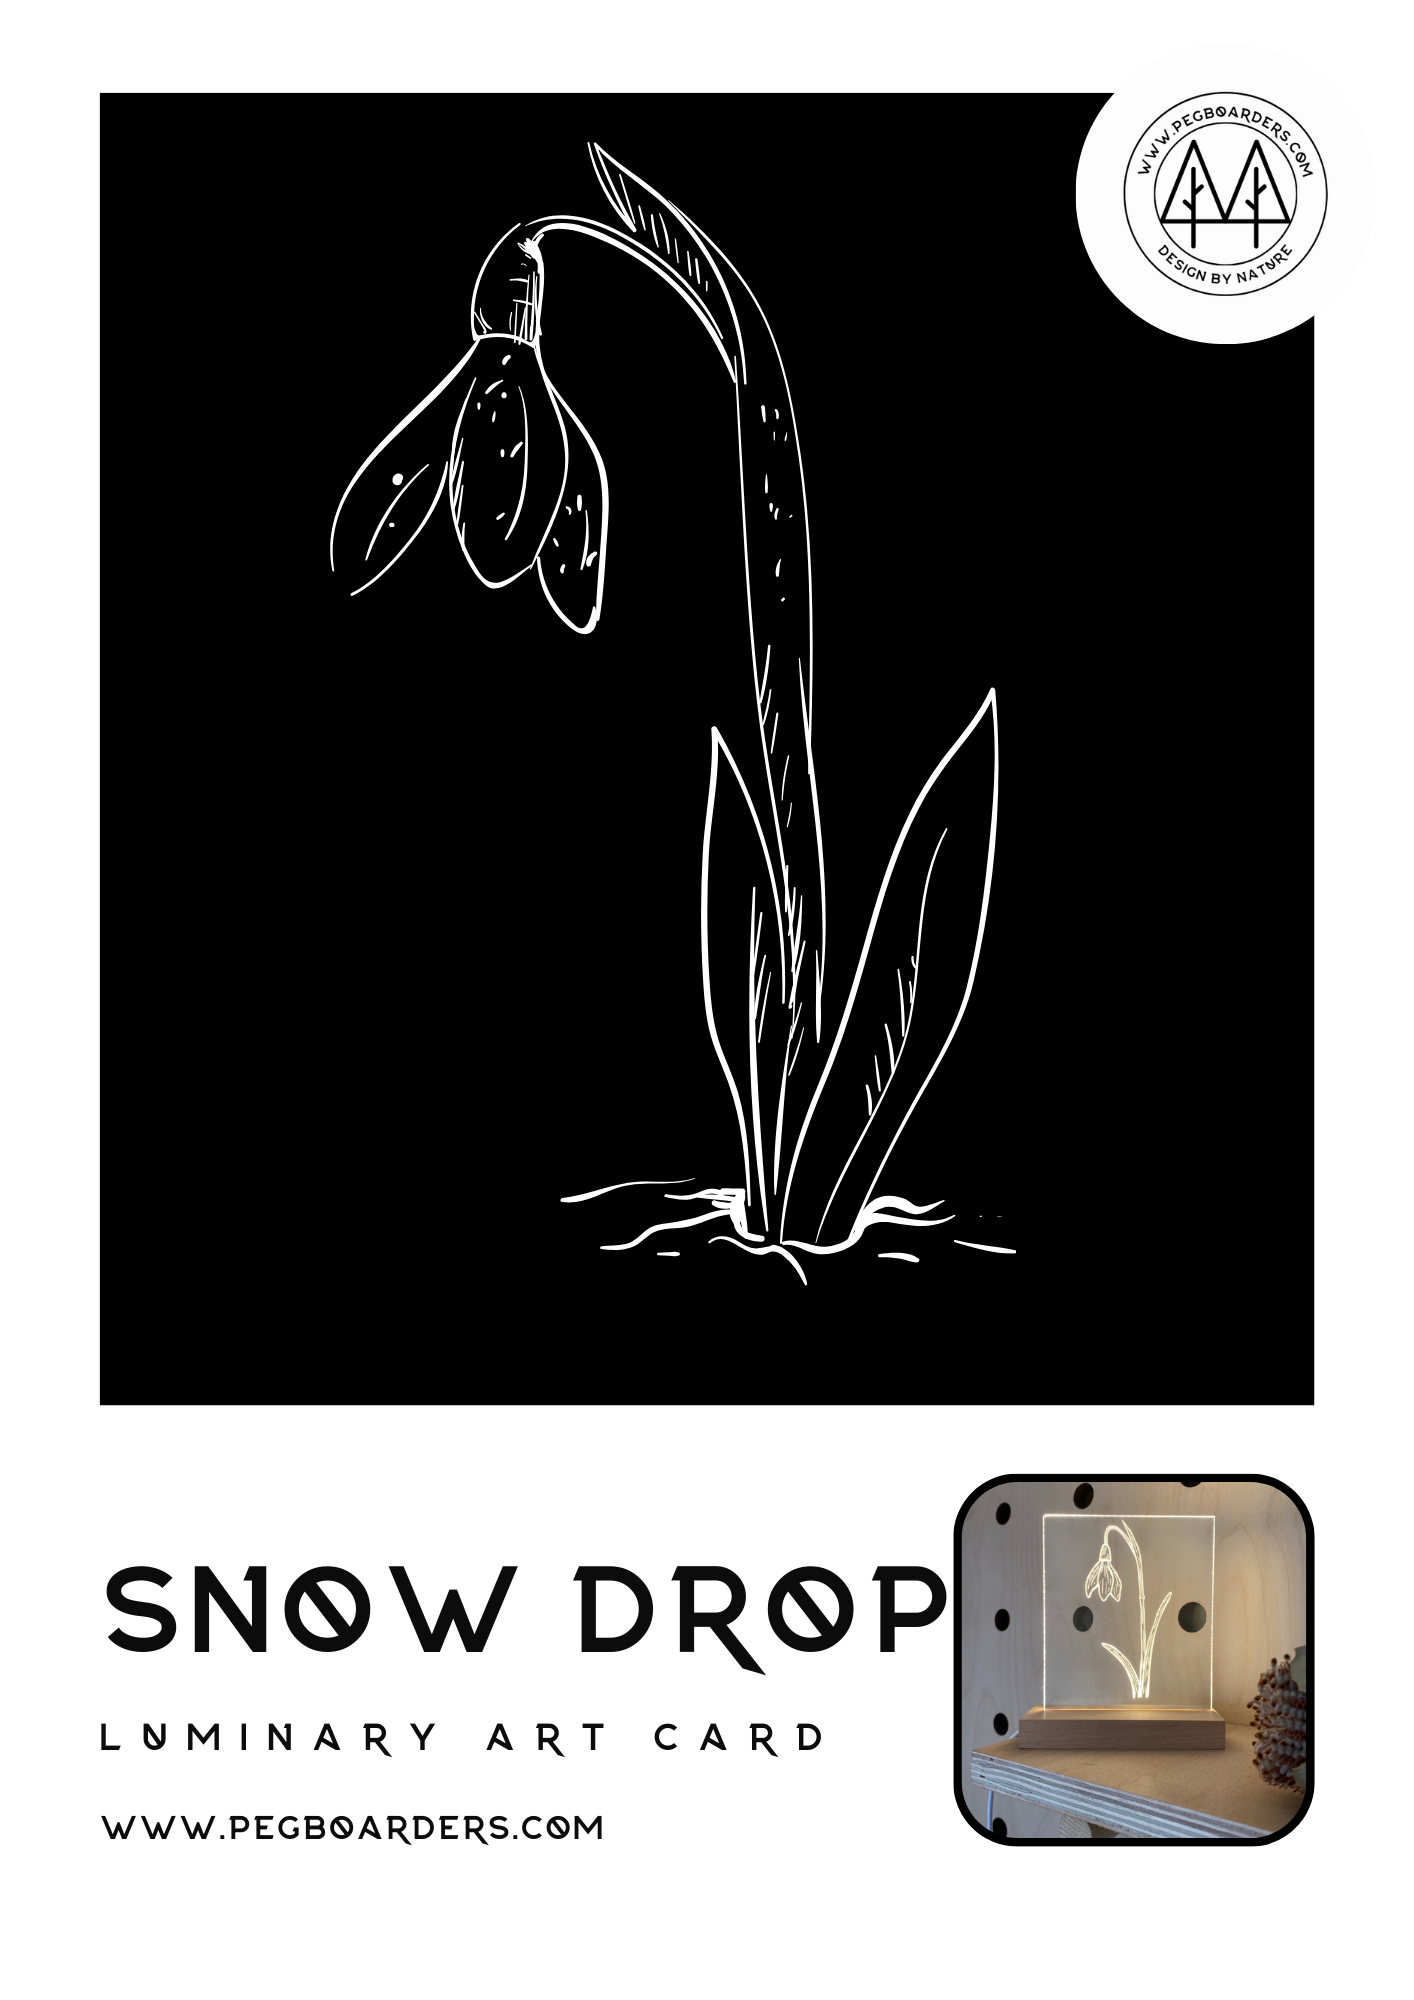 The Snow Drop Luminary Art Card